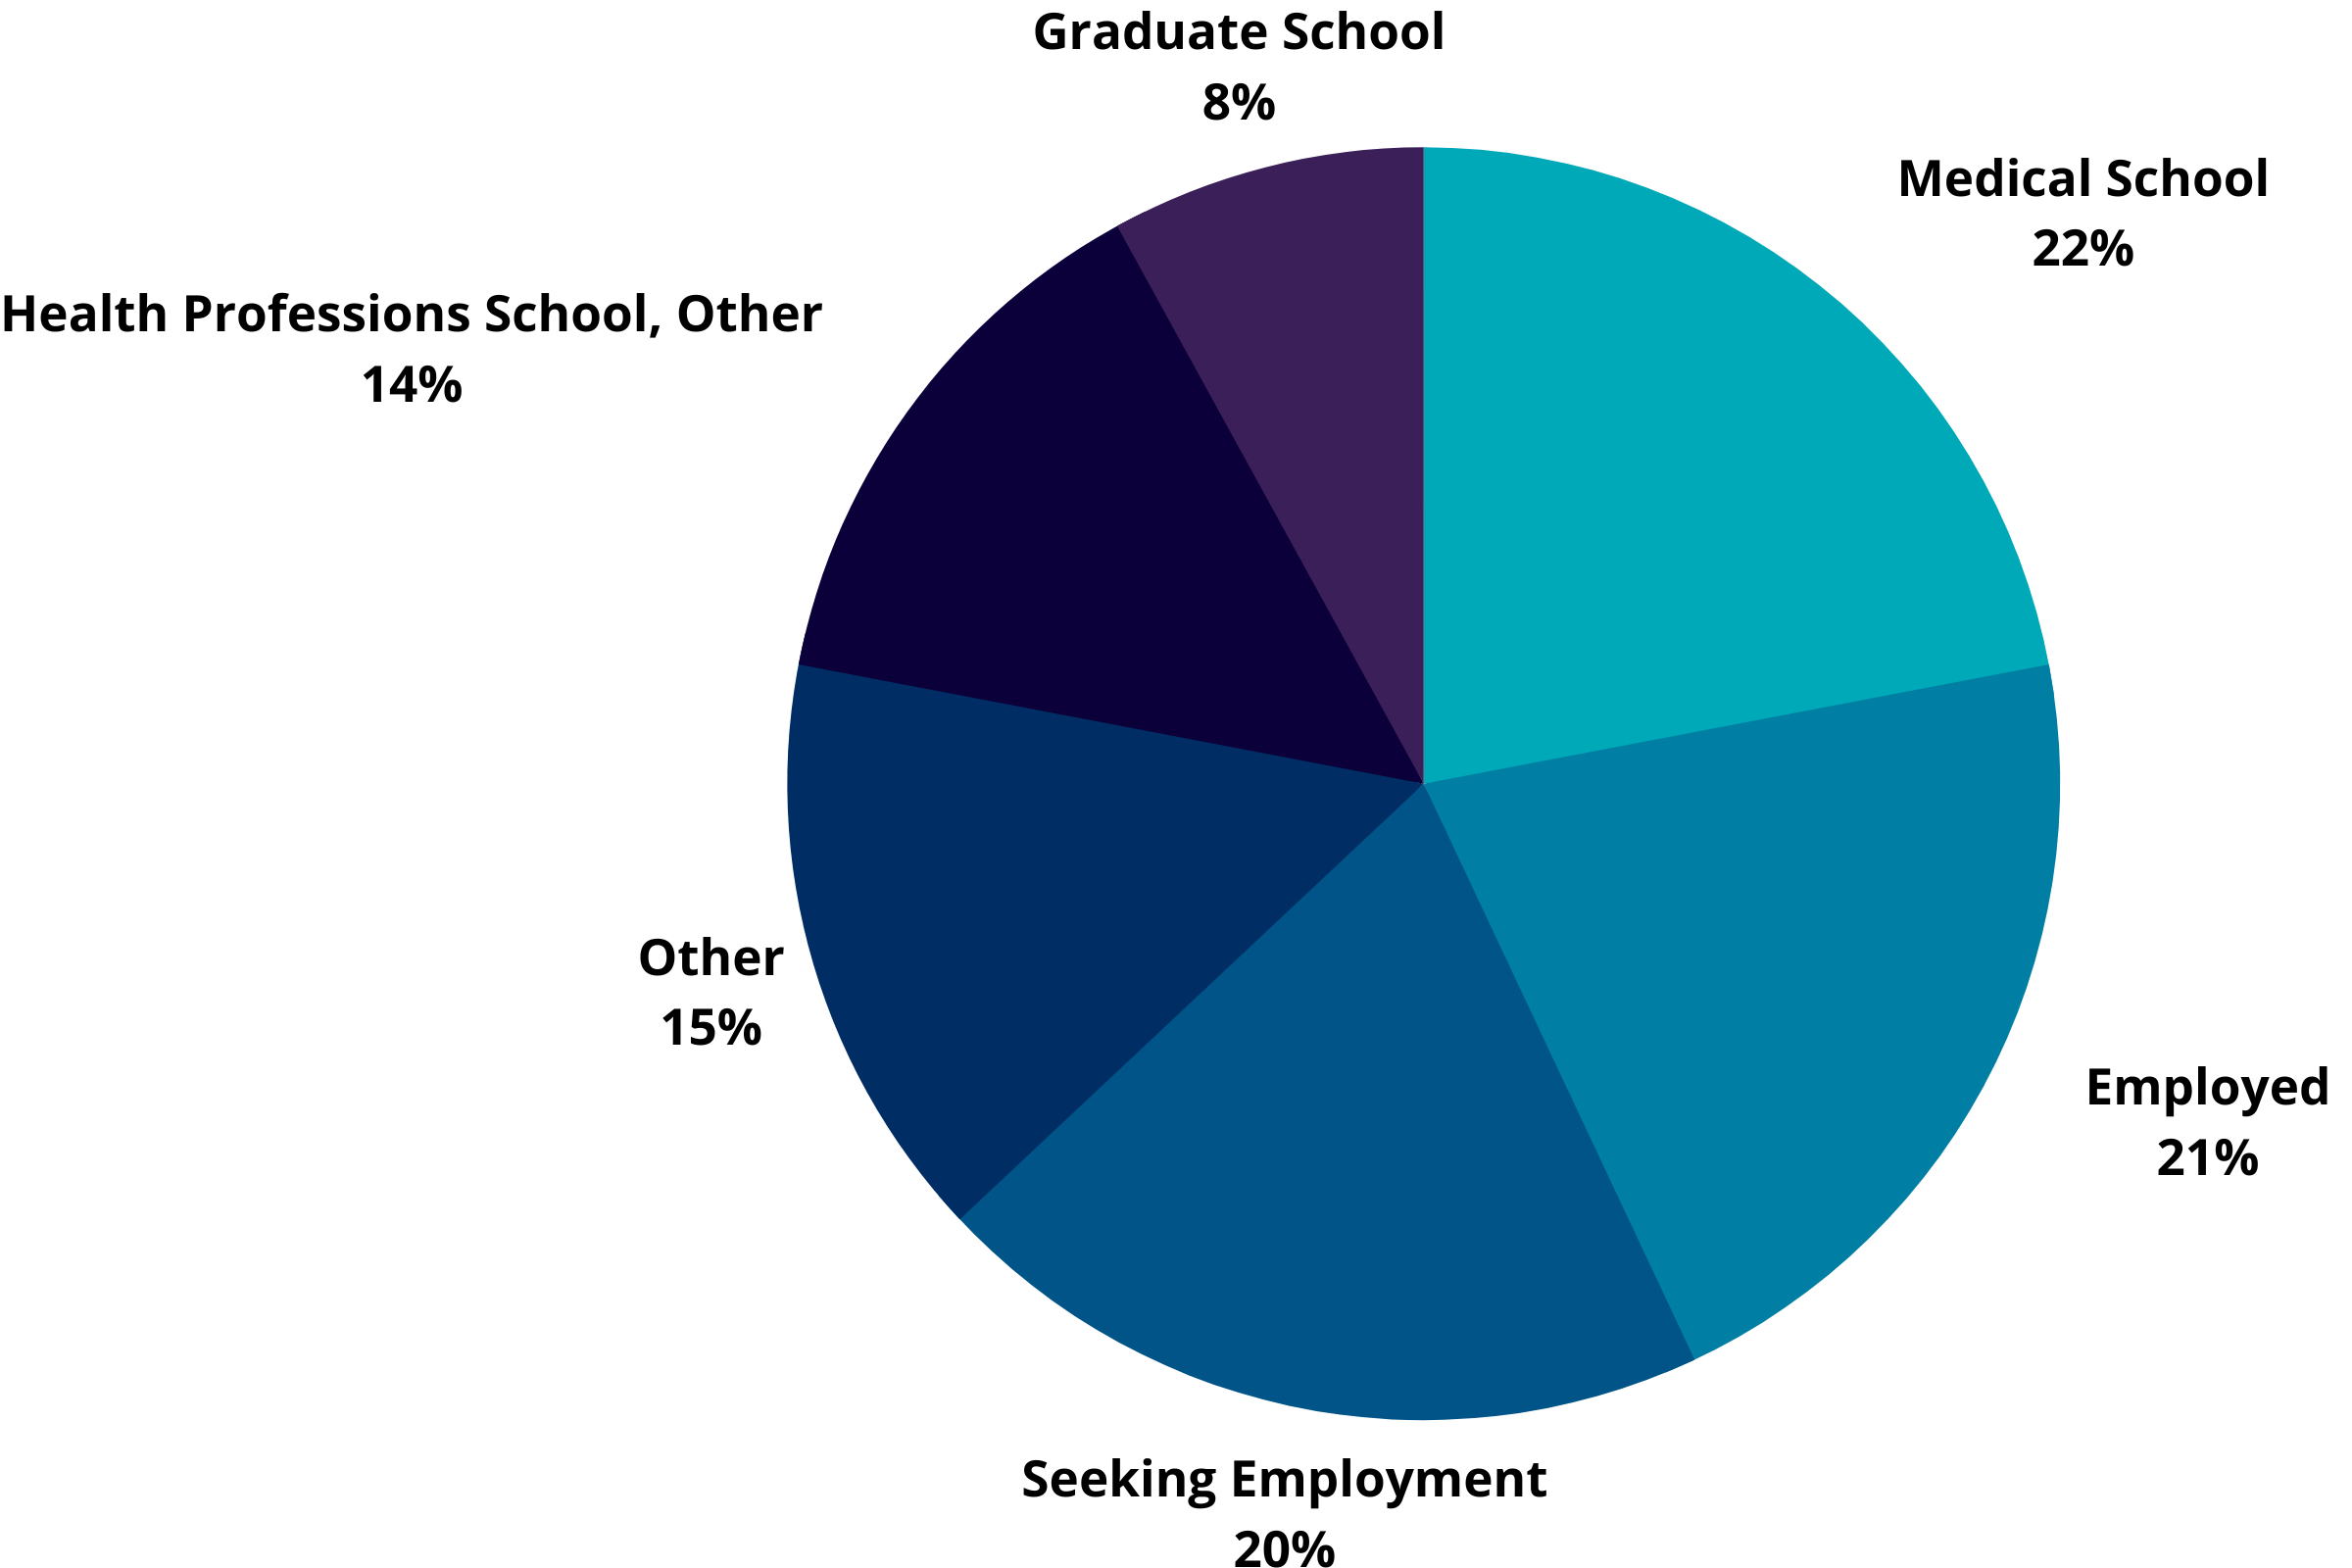 Biology Graduation Outcomes: Medical School 22%, Employed 21 %, Seeking Employment 20%, Health Professions School 14%, Graduate School 8%, Other 15%